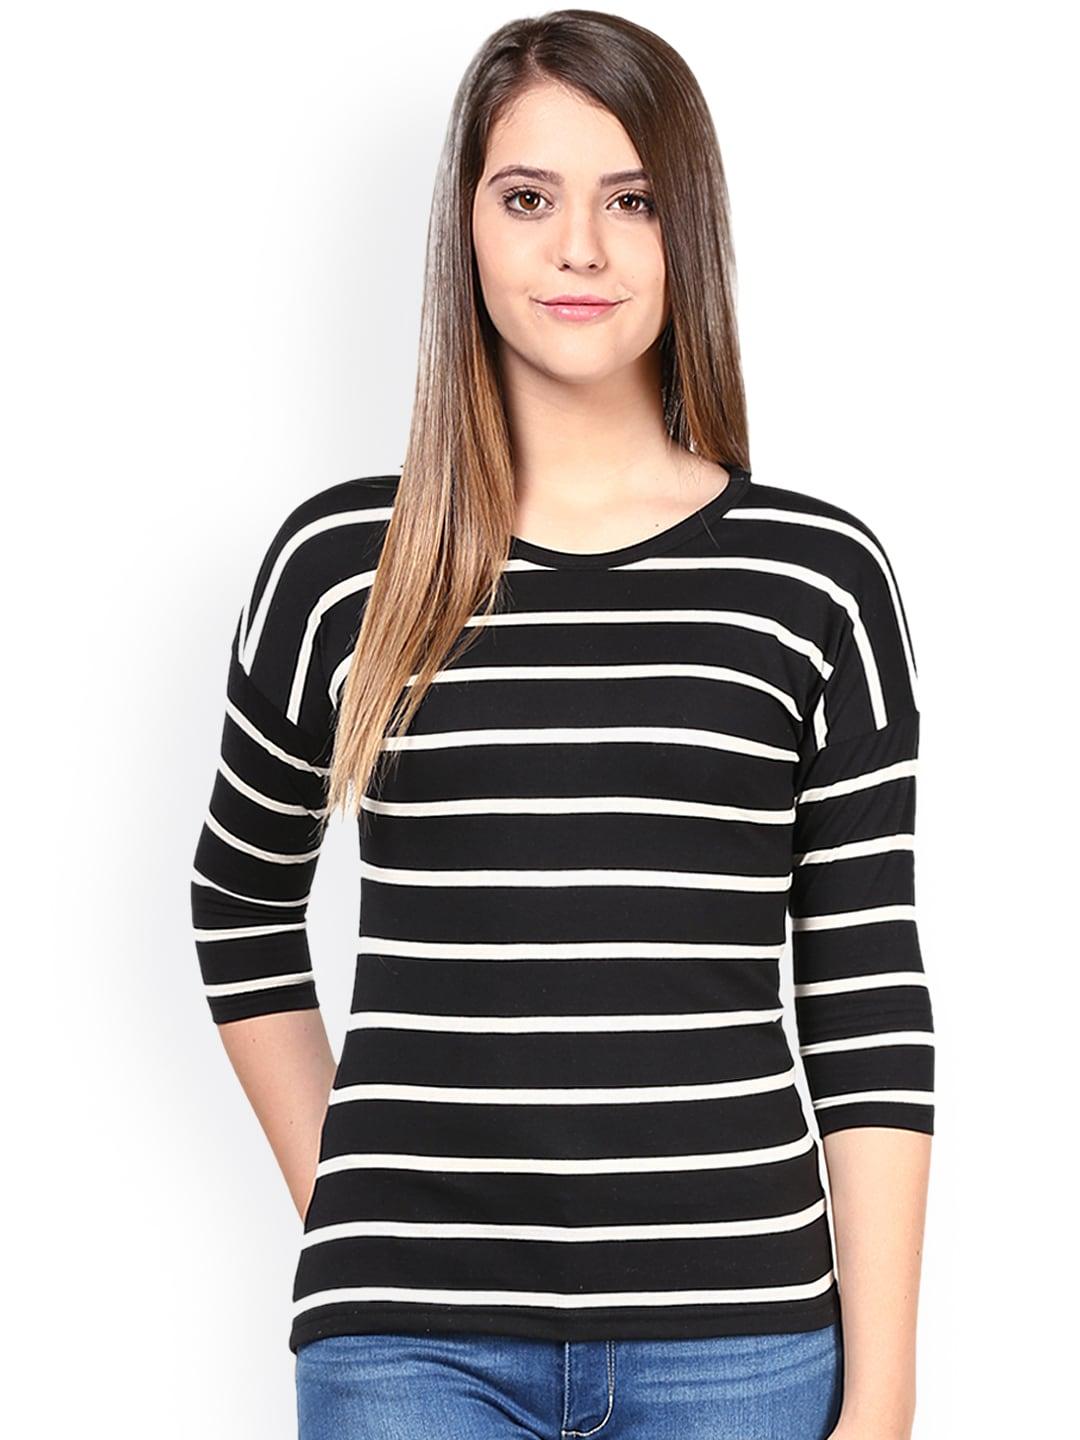 hypernation-black-striped-t-shirt